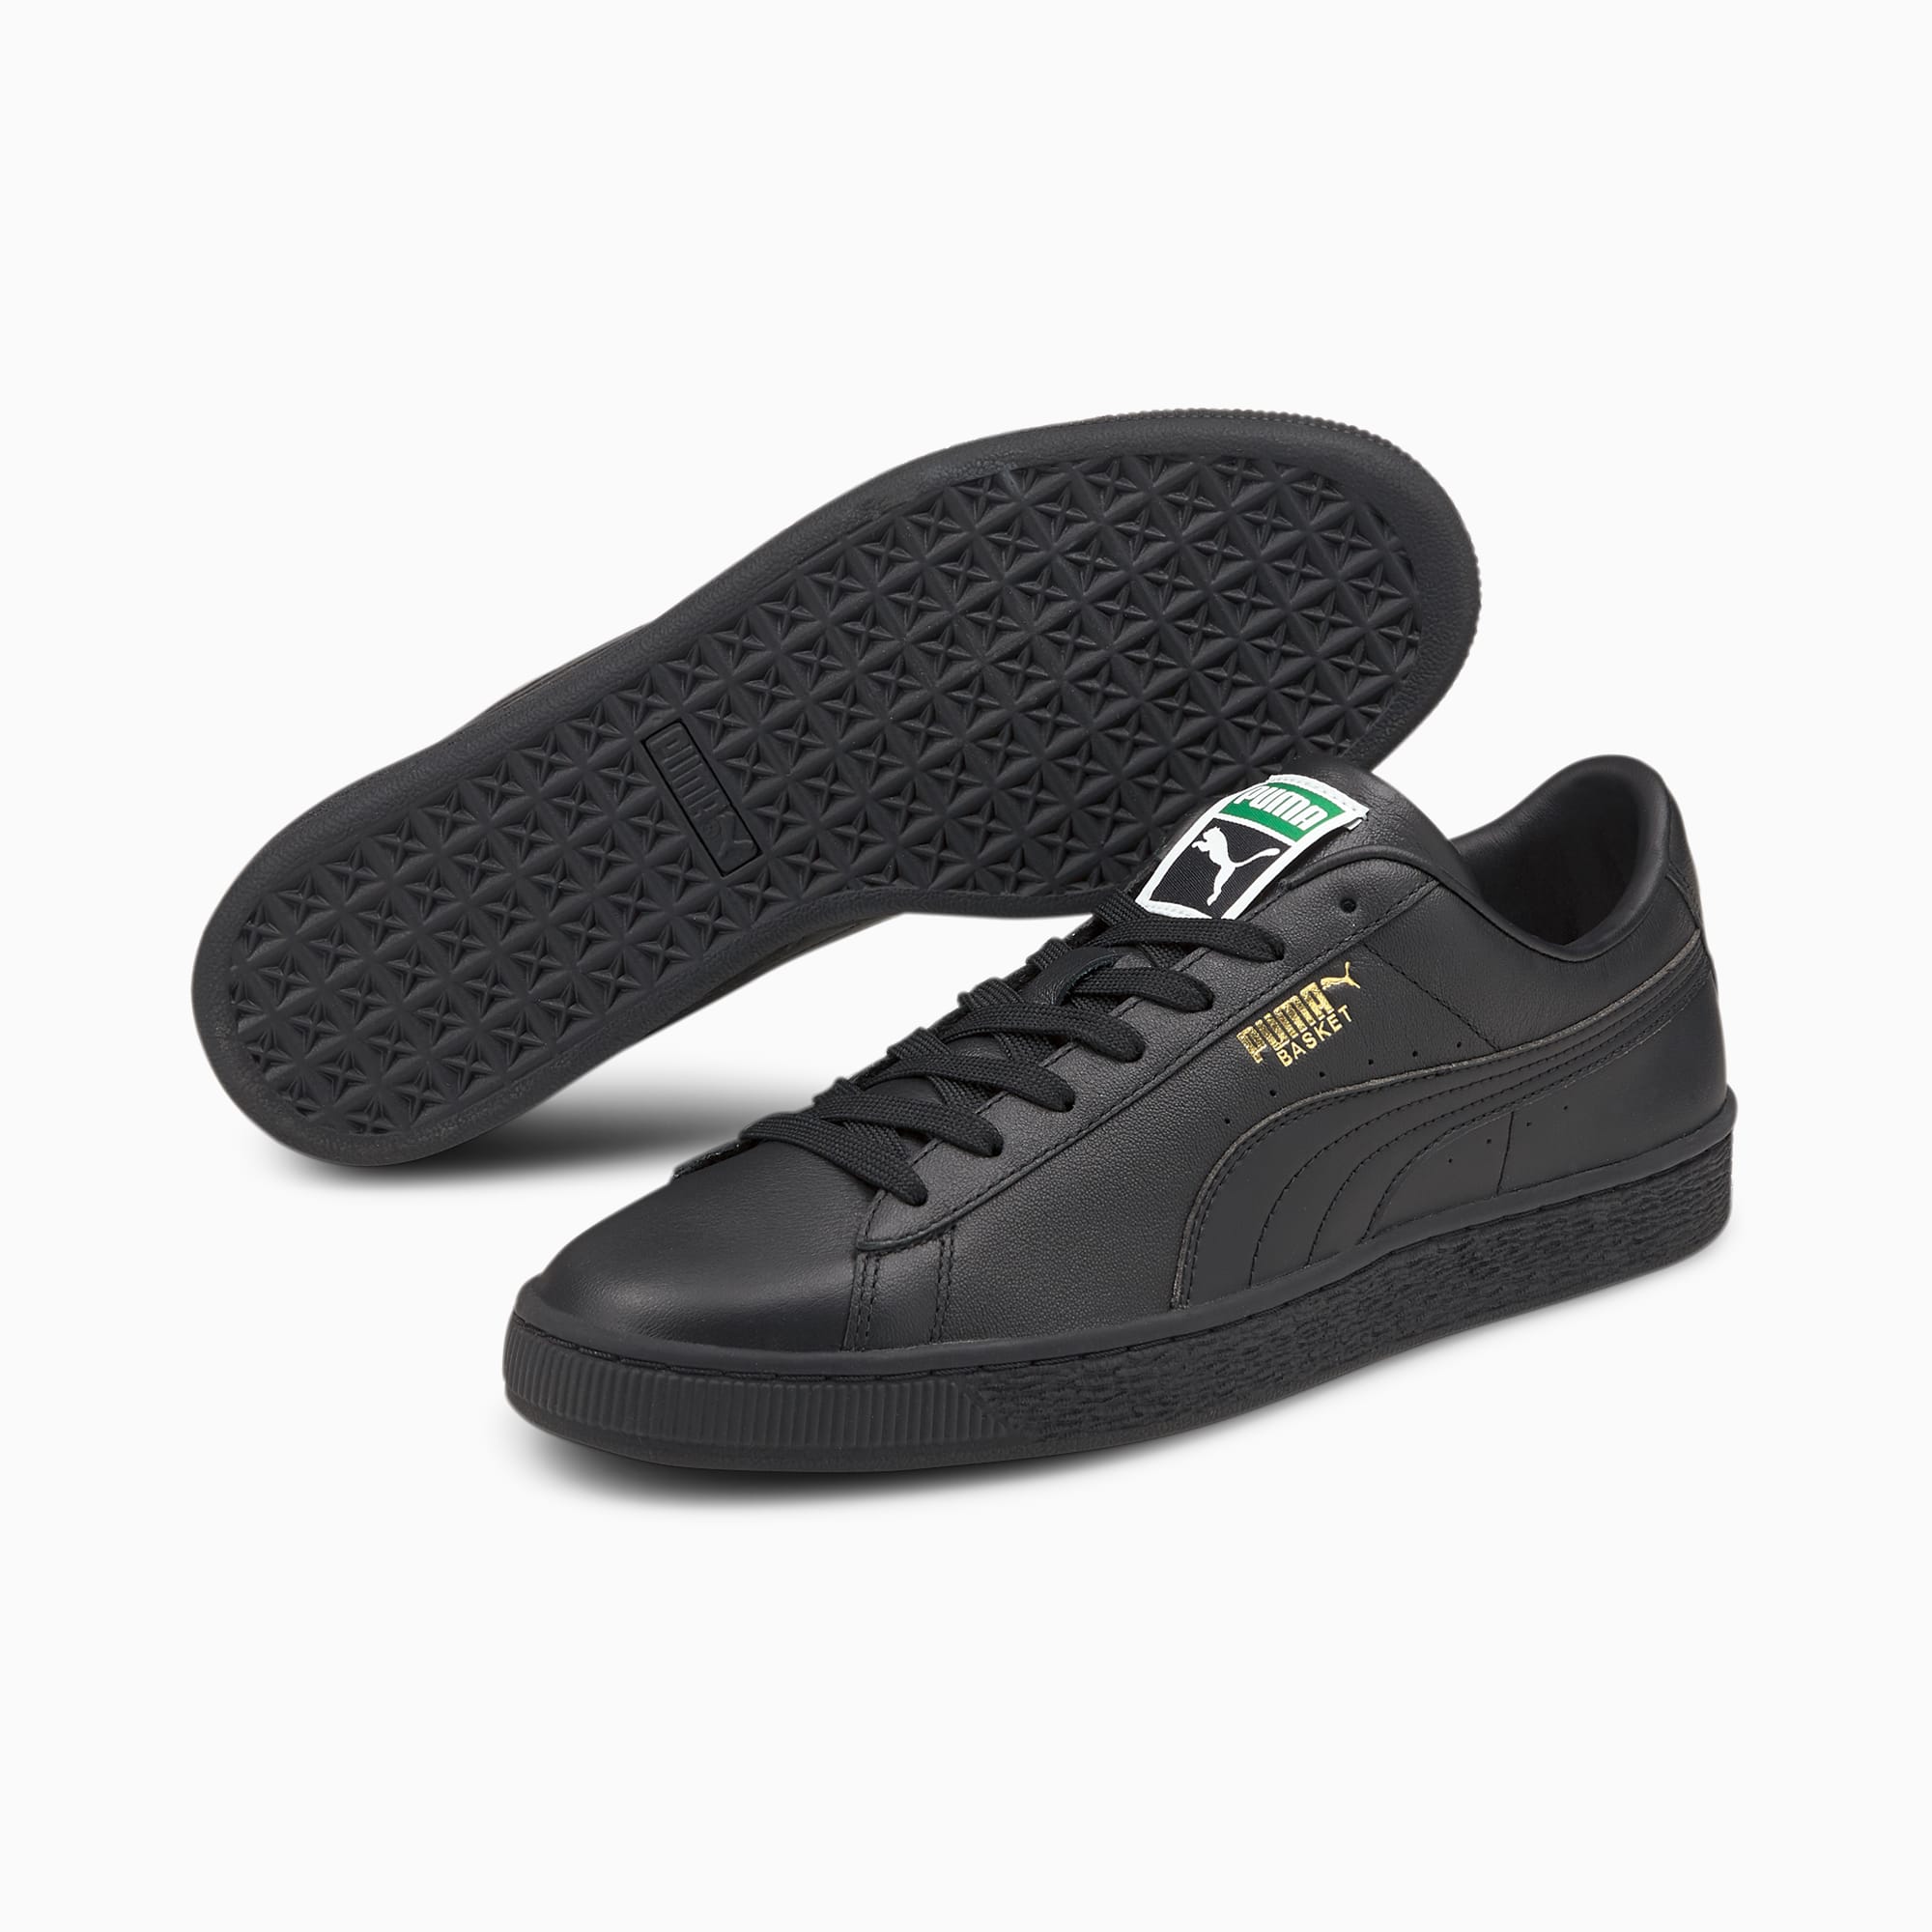 black puma basketball shoes